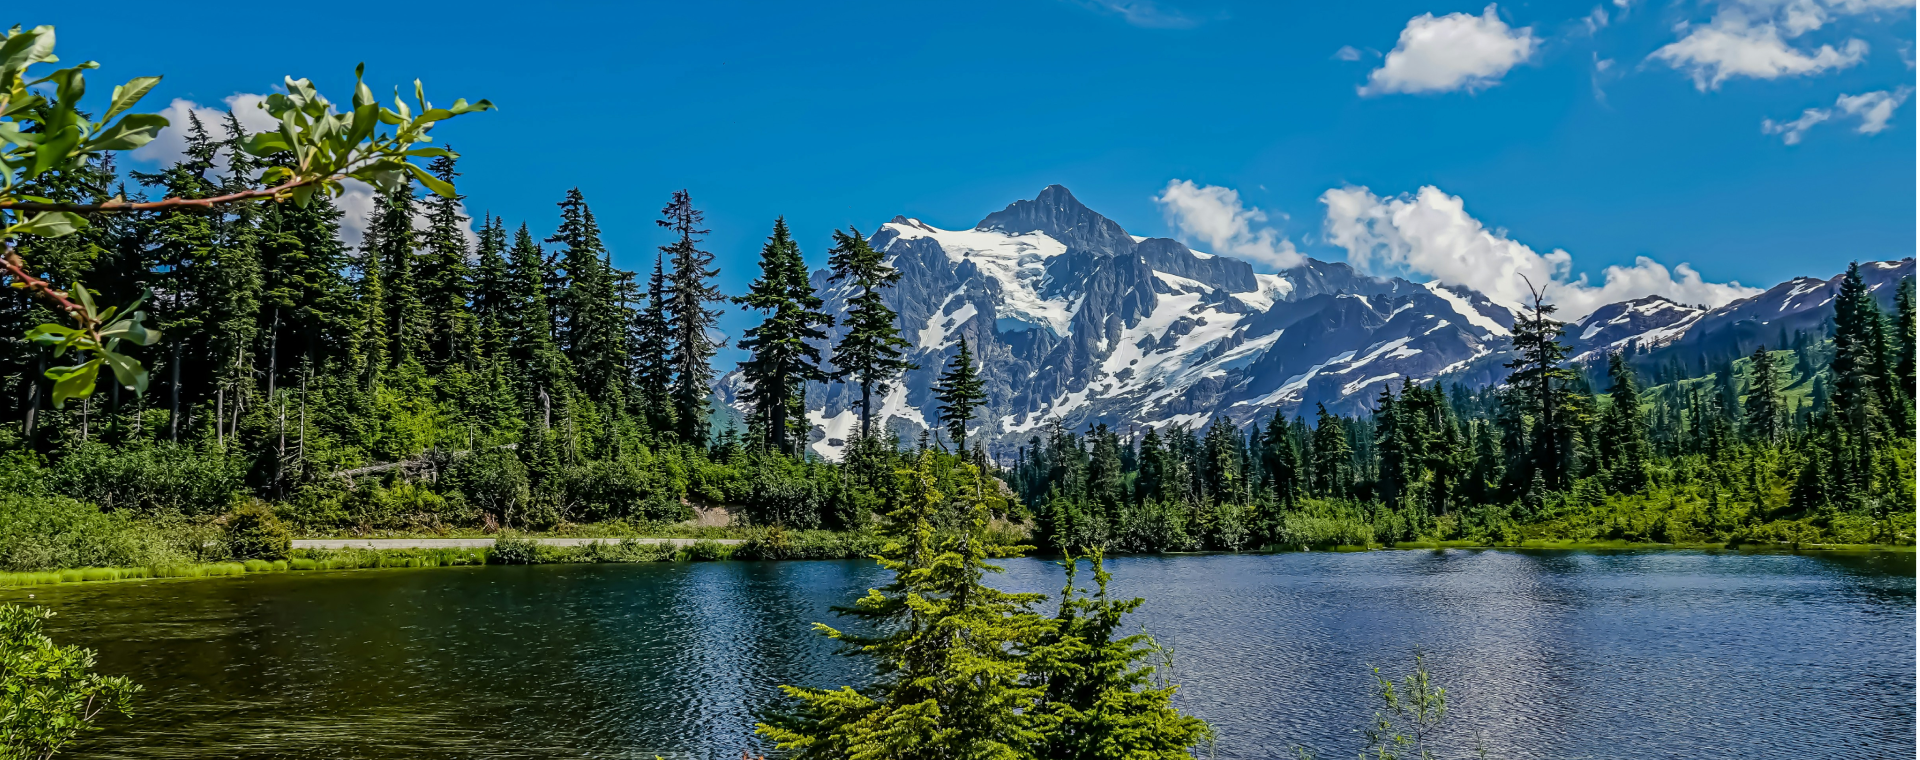 Washington mountain range and lake